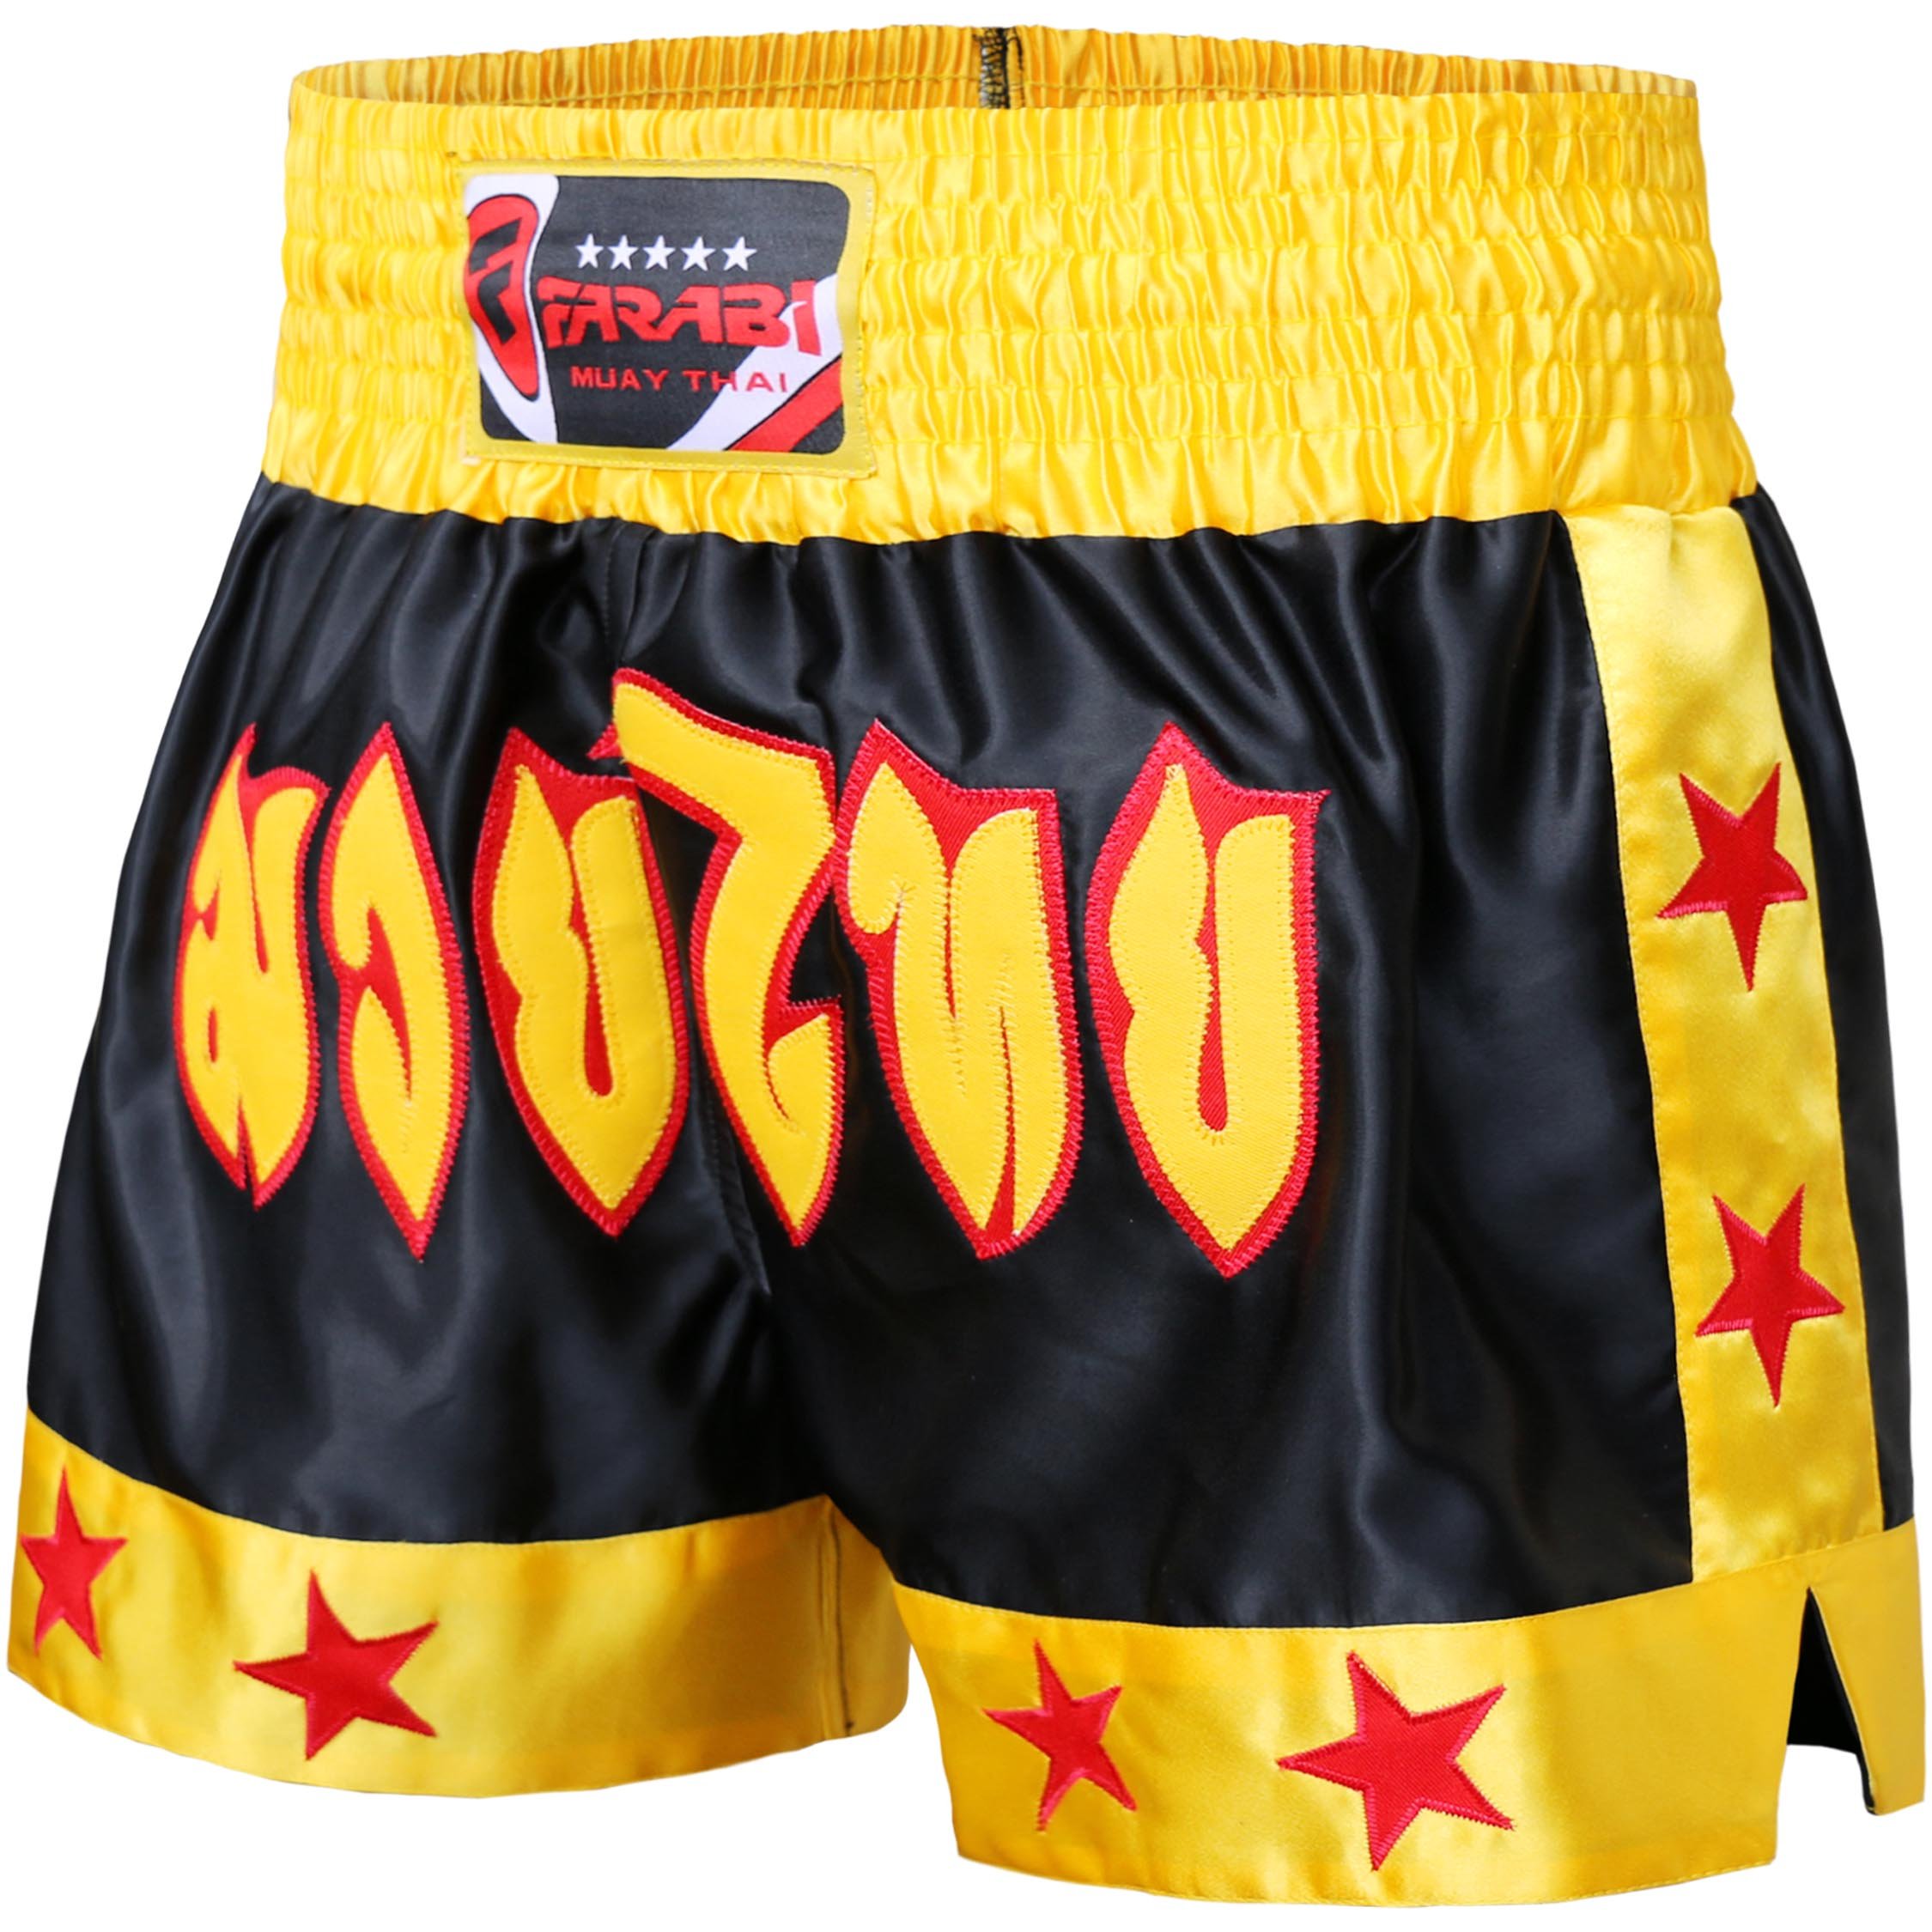 Farabi Sports Muay Thai Short Kickboxen Shorts Training Muay Thai Hose (S, Black/Yellow)